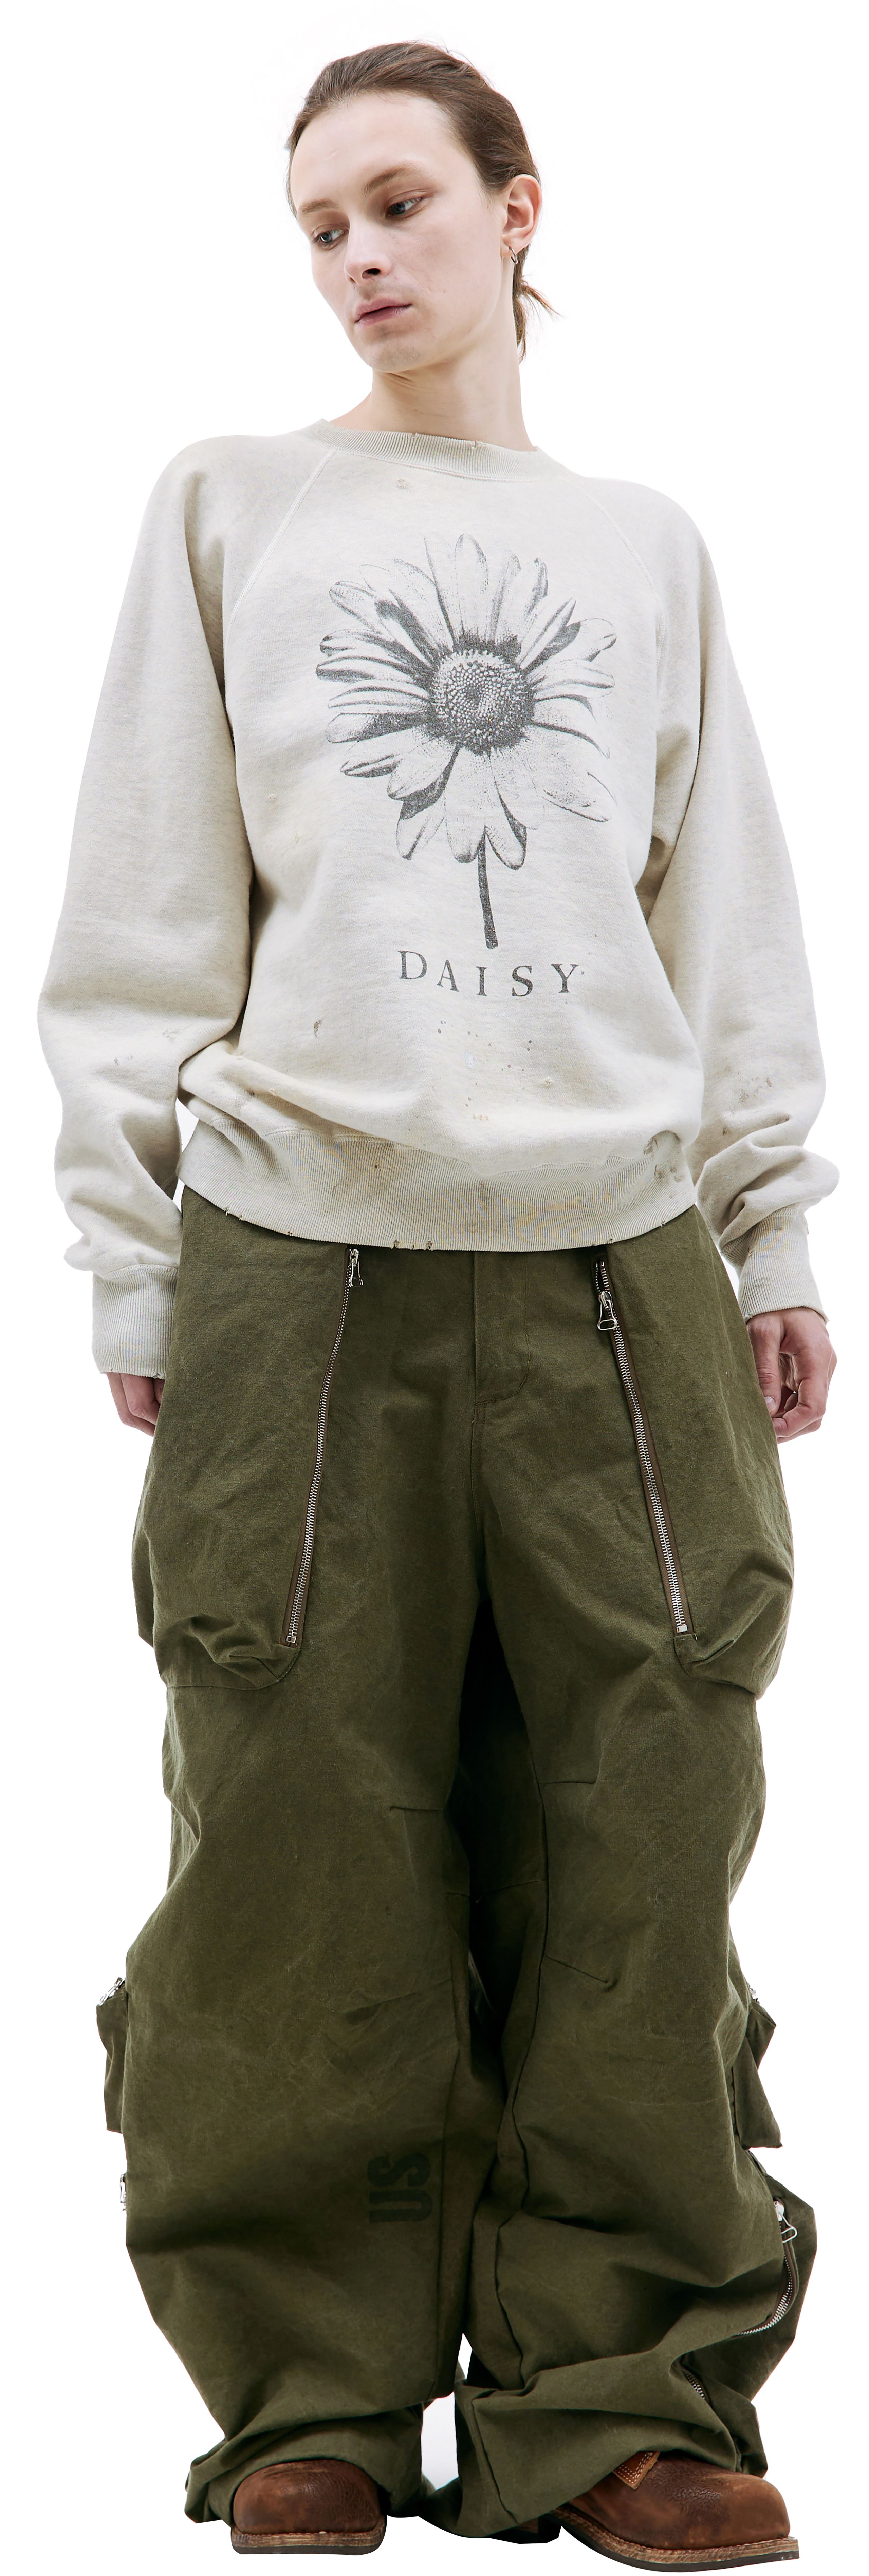 Buy Saint Michael men beige 'daisy' printed sweatshirt for £740